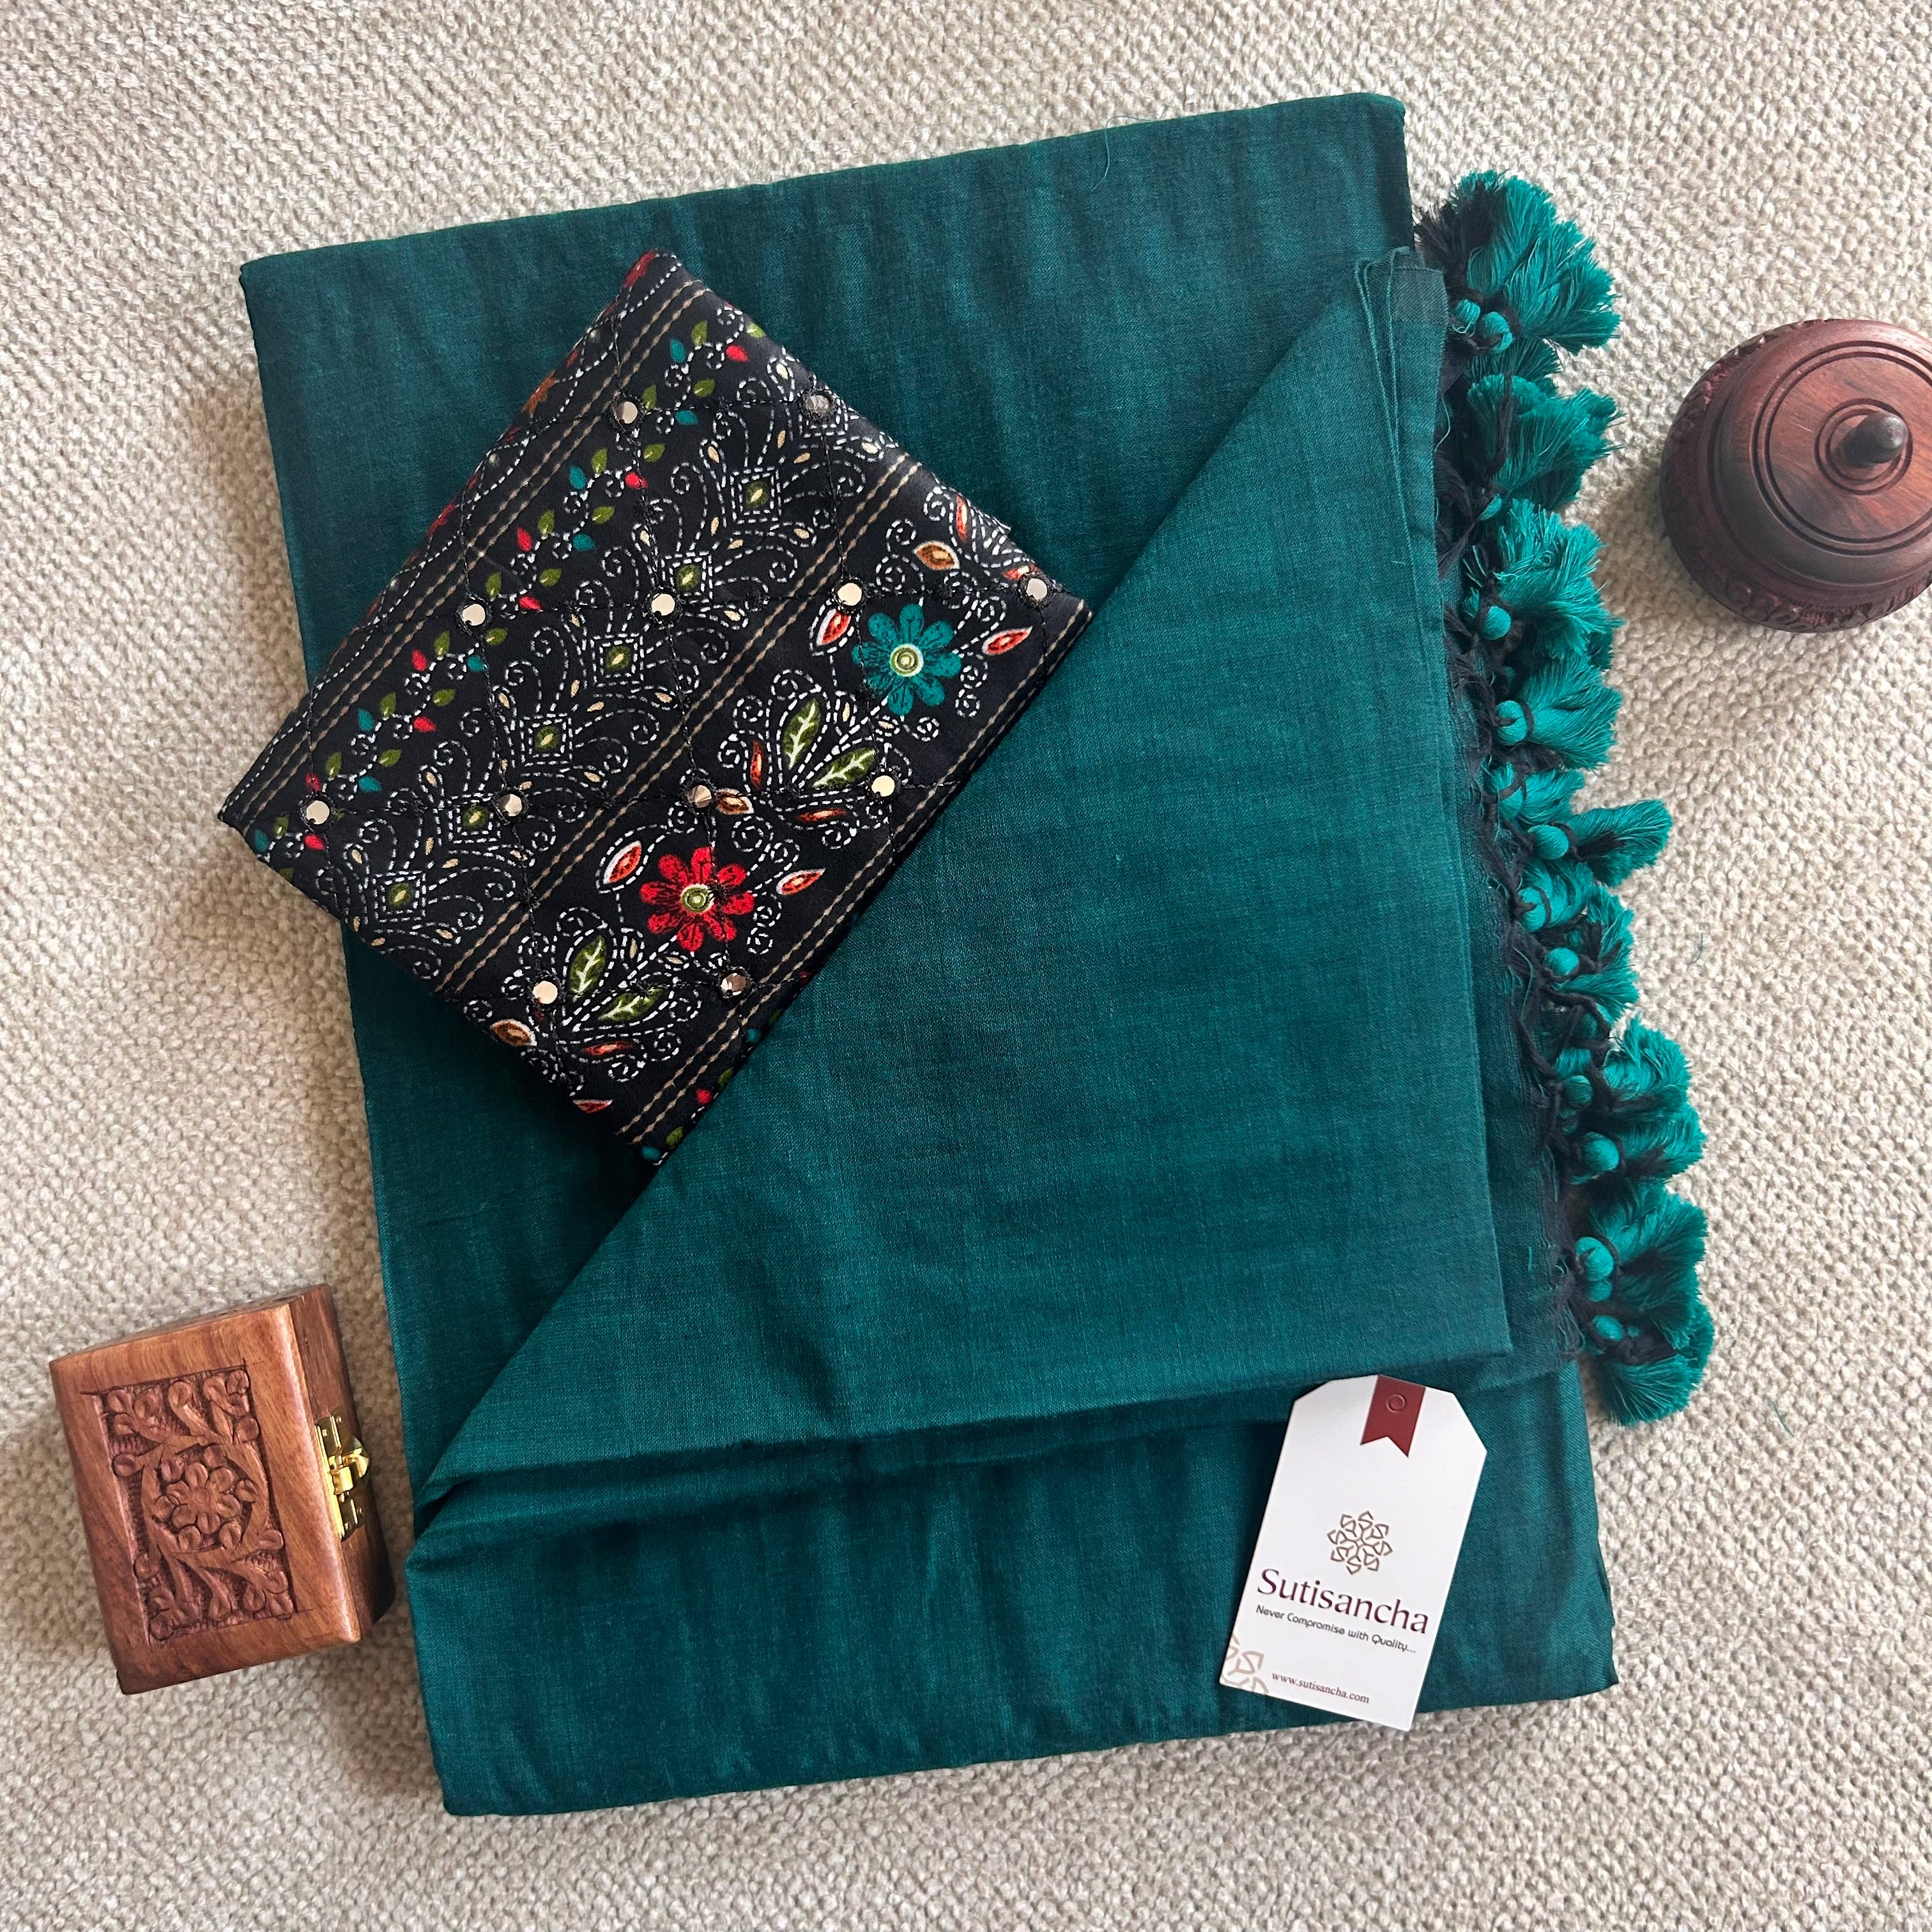 Sutisancha Rama Handloom Cotton Saree with Designer Work Blouse